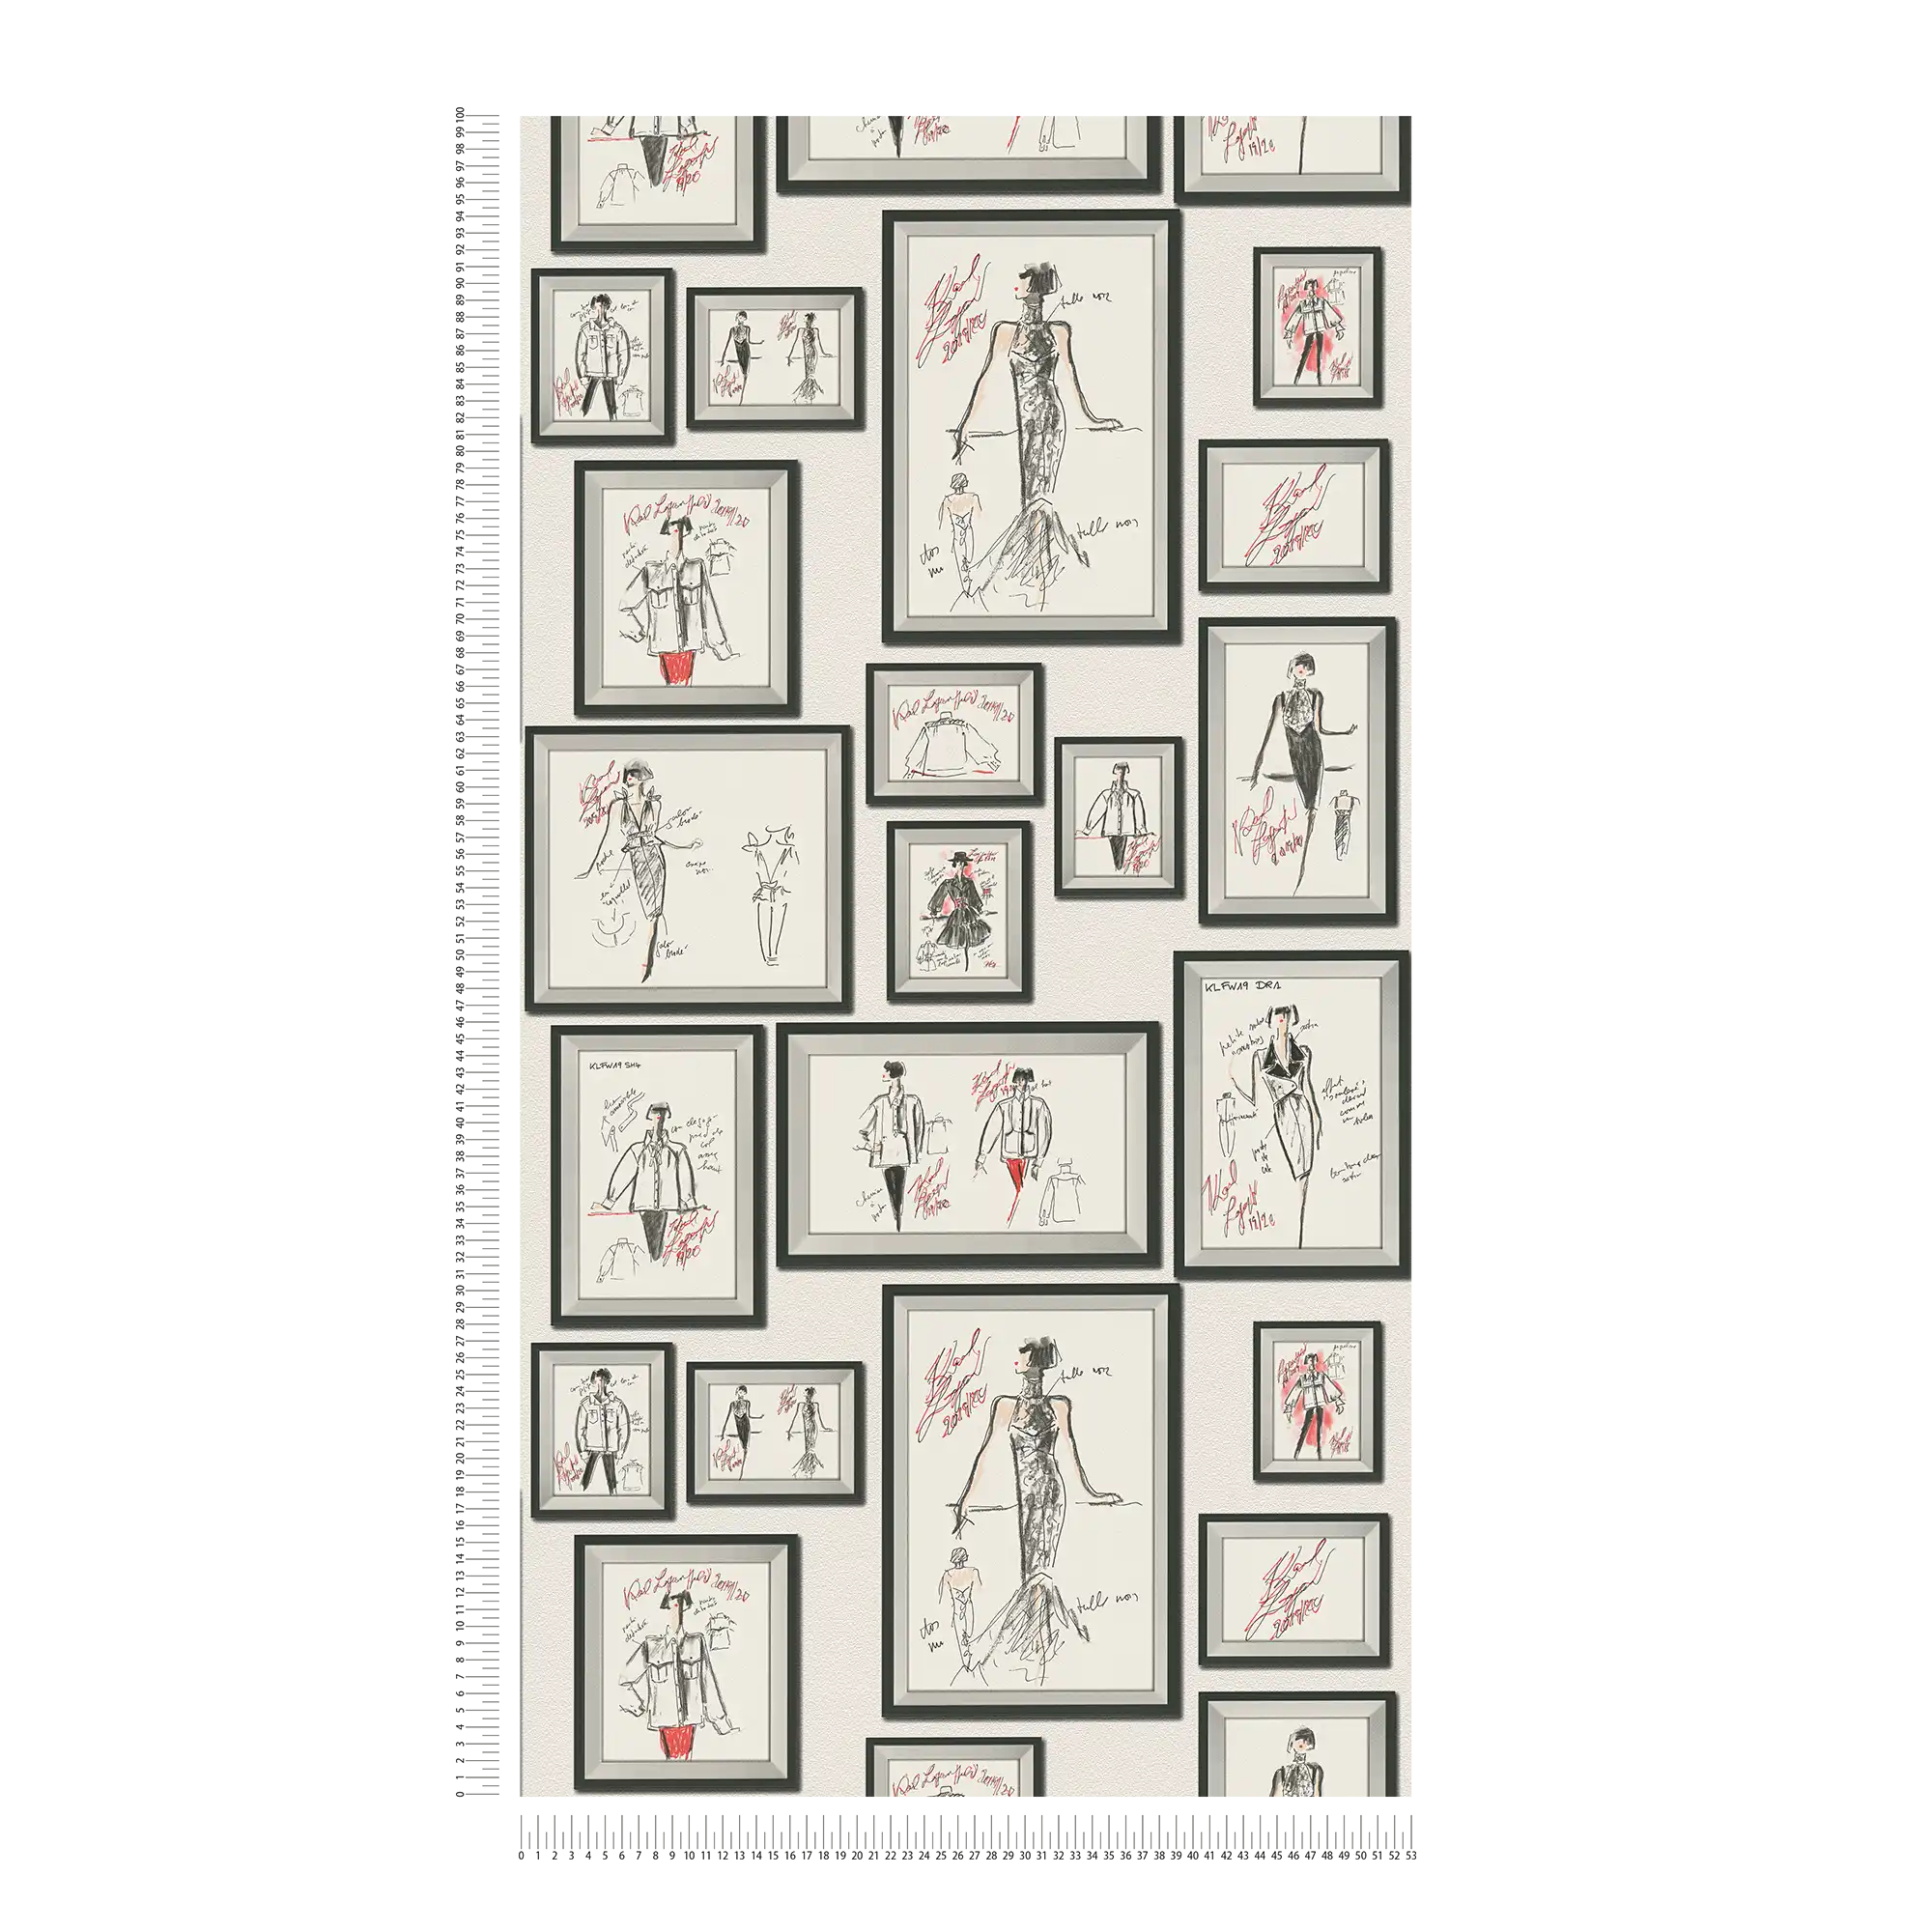             Karl LAGERFELD vliesbehang modeontwerpen - wit, zwart
        